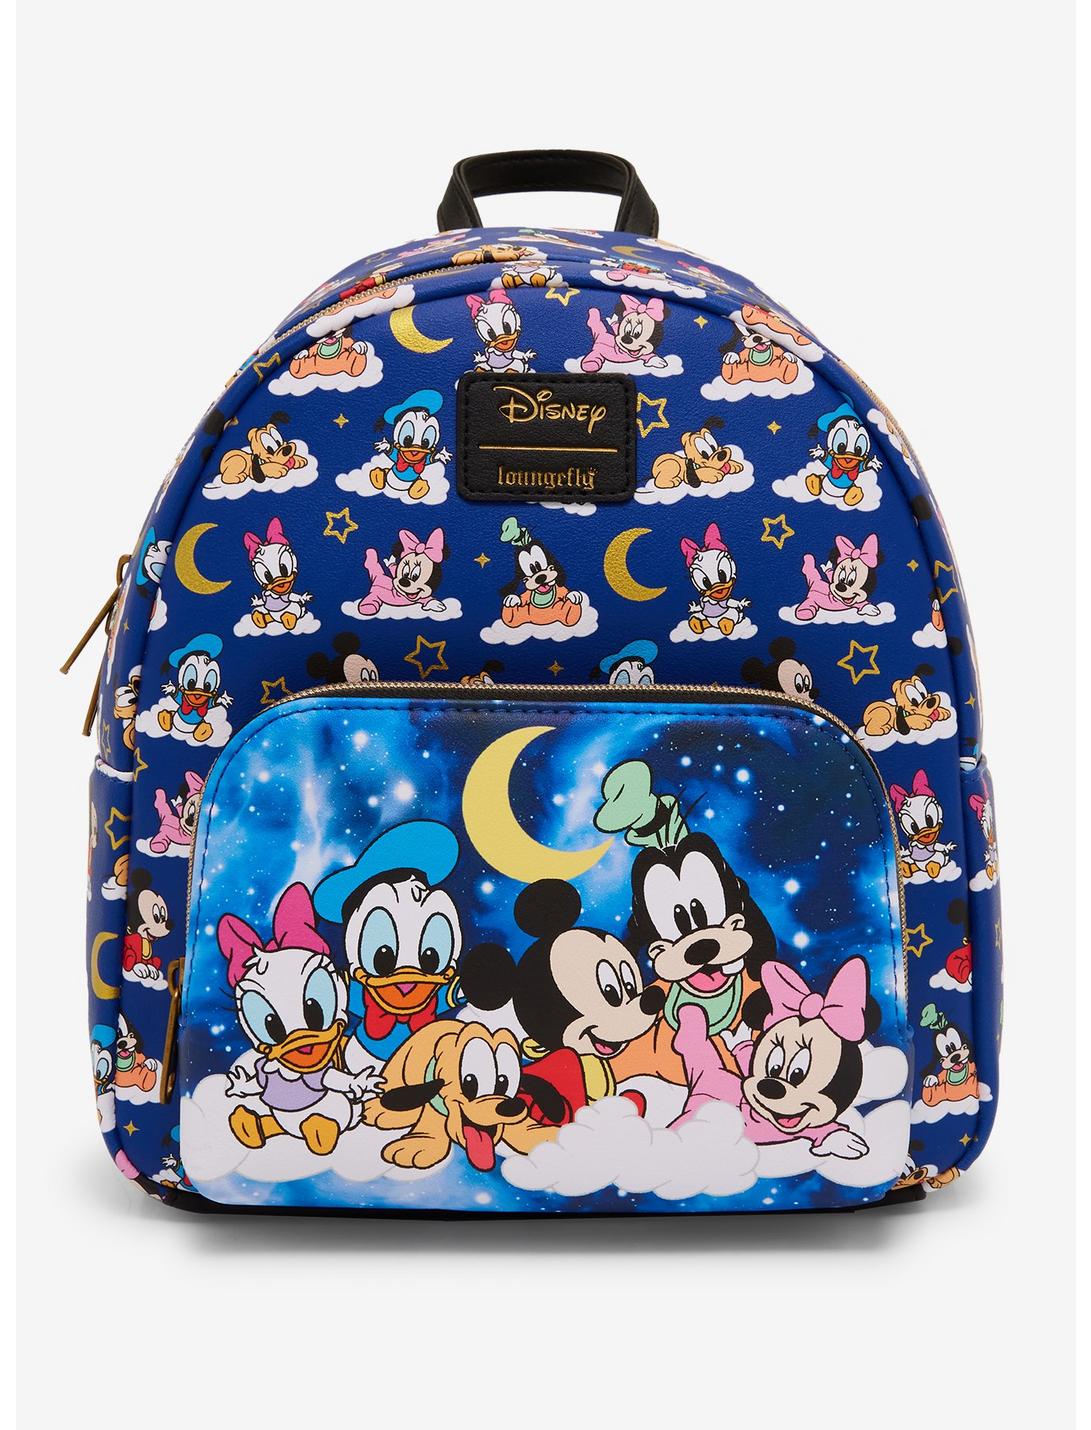 Loungefly Disney Baby Sensational Six Mini Backpack, , hi-res